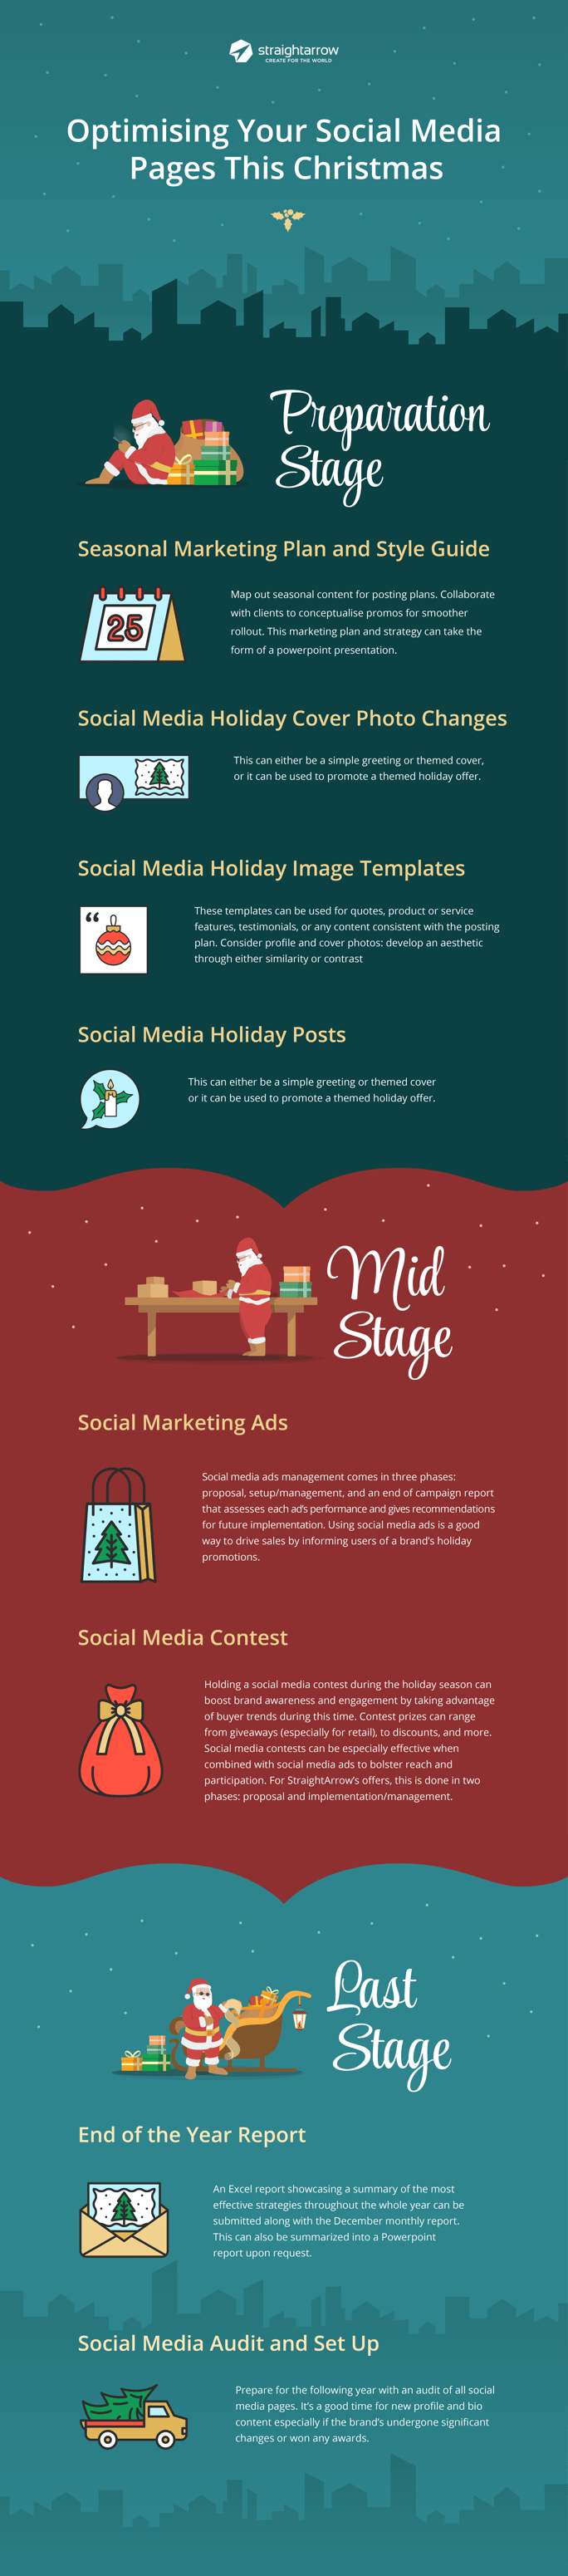 Optimizing Social Media For Christmas Infographic